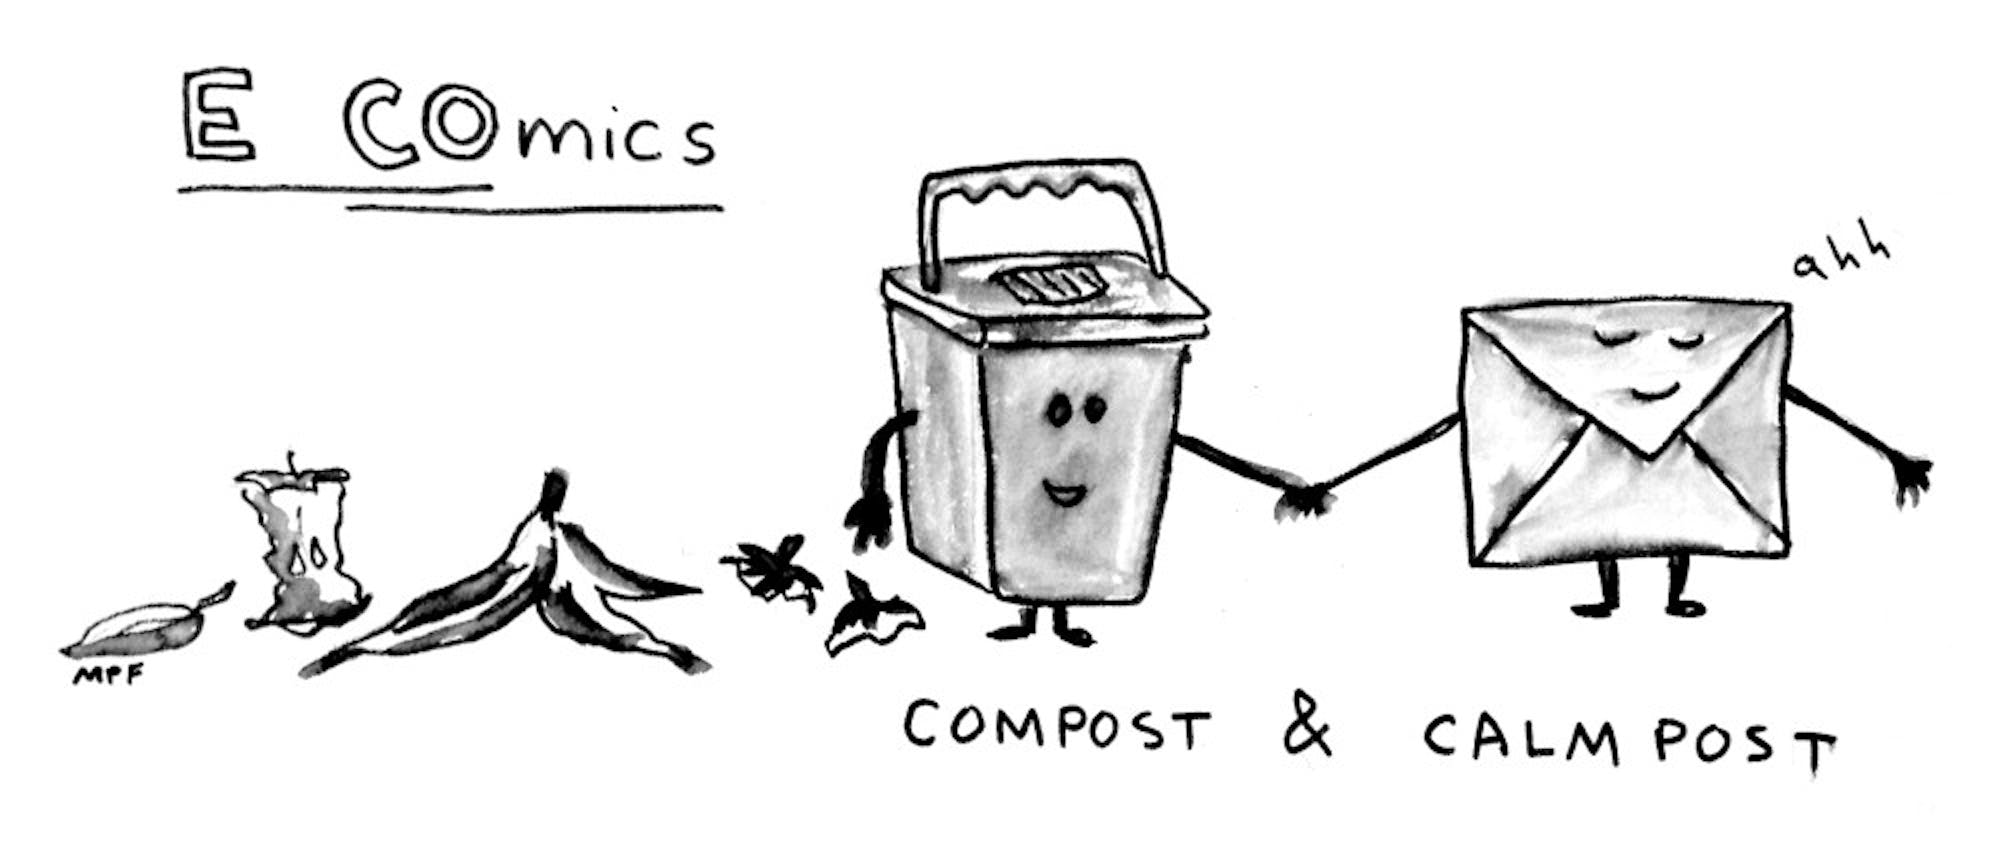 Fong-Compost